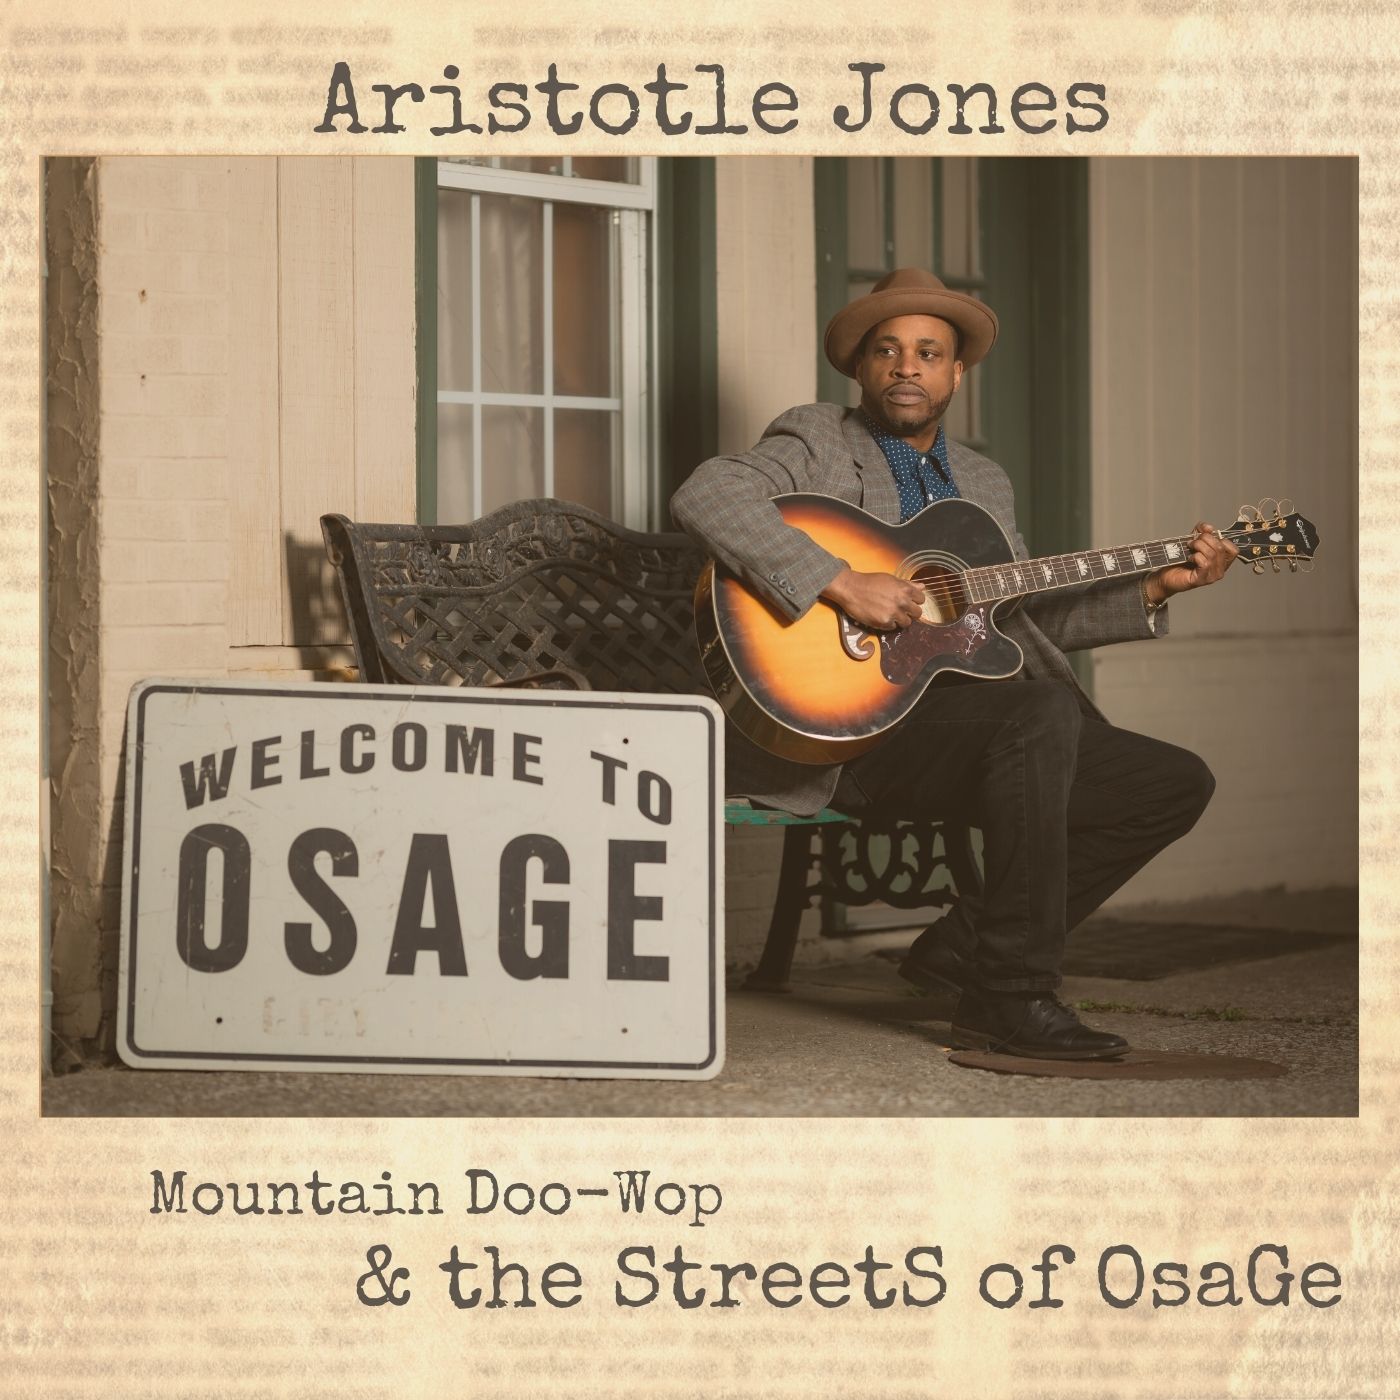 Aristotle Jones ‘Mountain Doo-Wop & the Streets of Osage’ album artwork